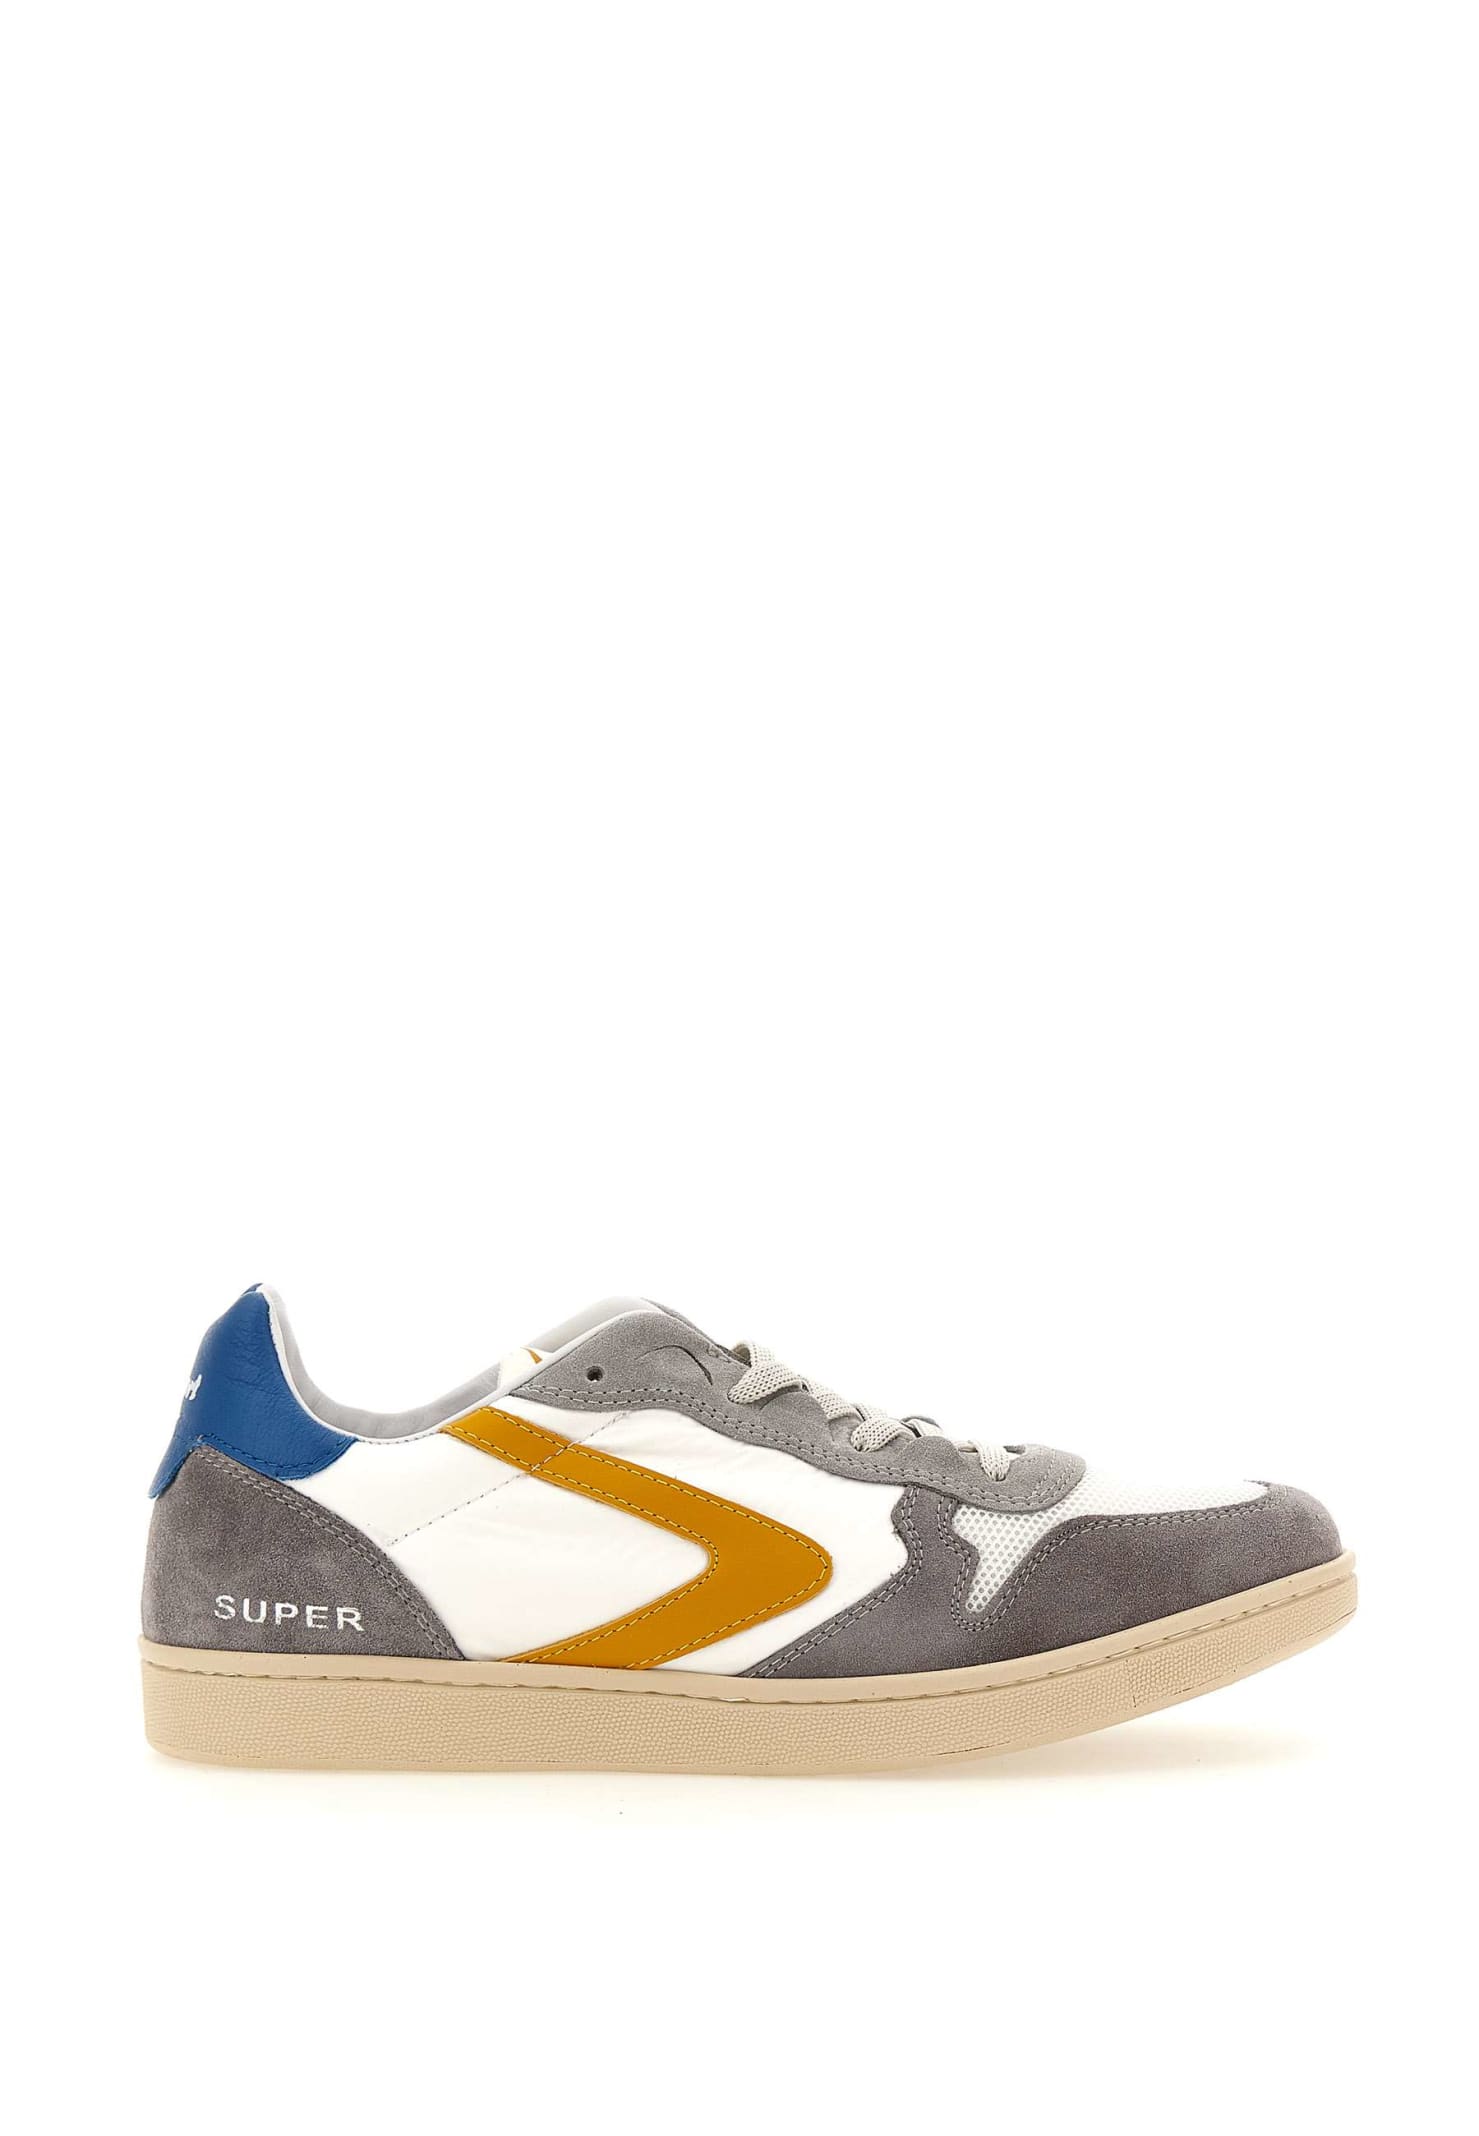 Valsport Supernnylon21 Sneakers In Grey, Blue, Yellow